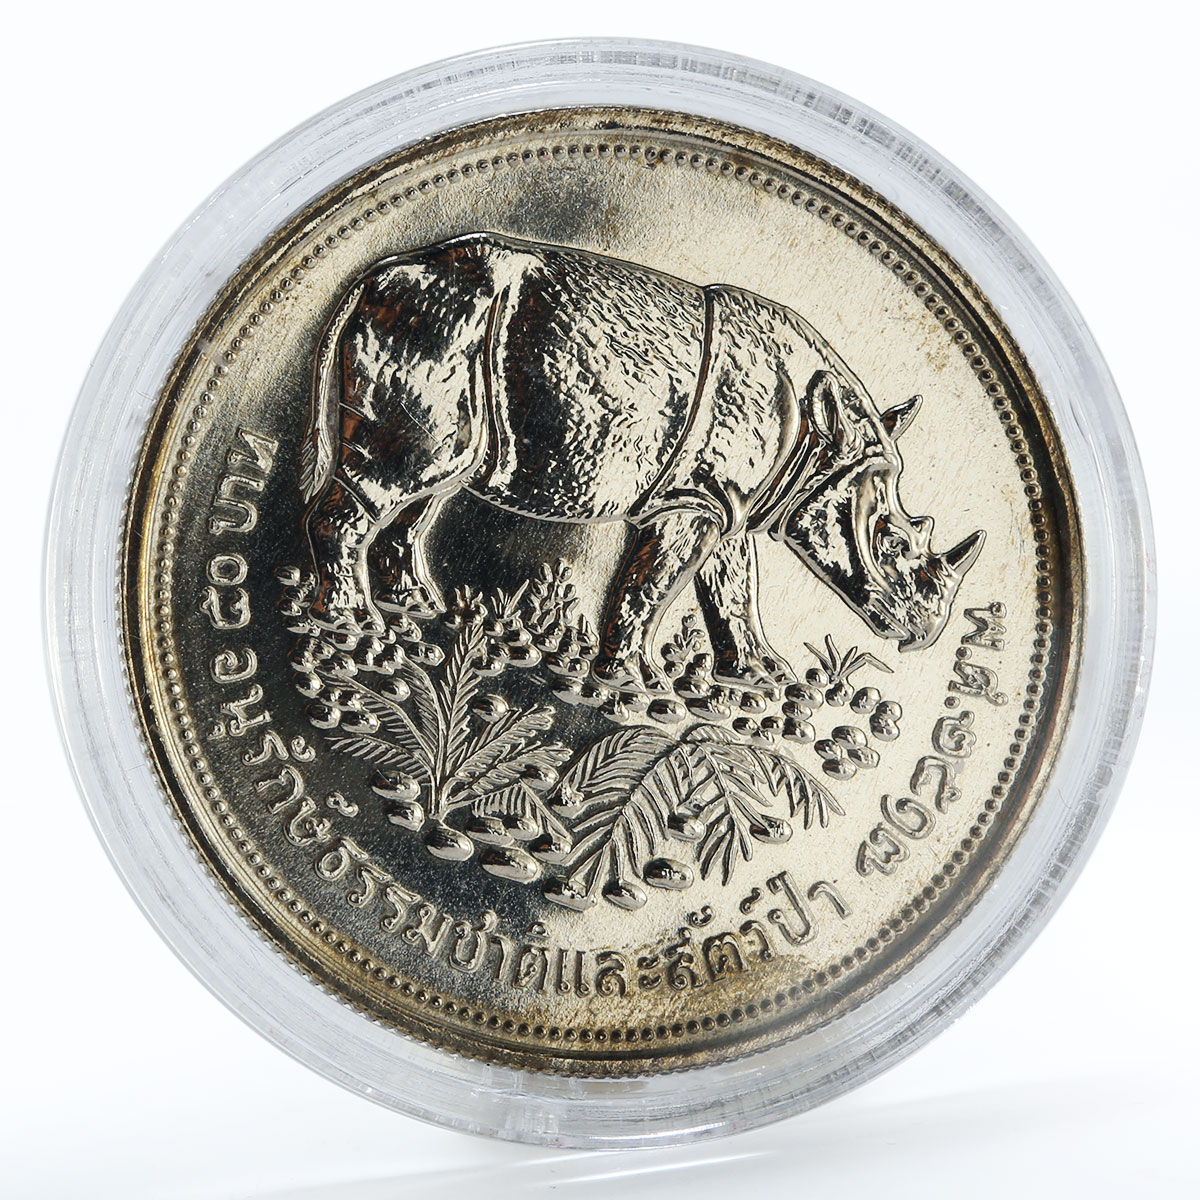 Thailand 50 baht Wildlife Conservation rhinoceros silver coin 1974